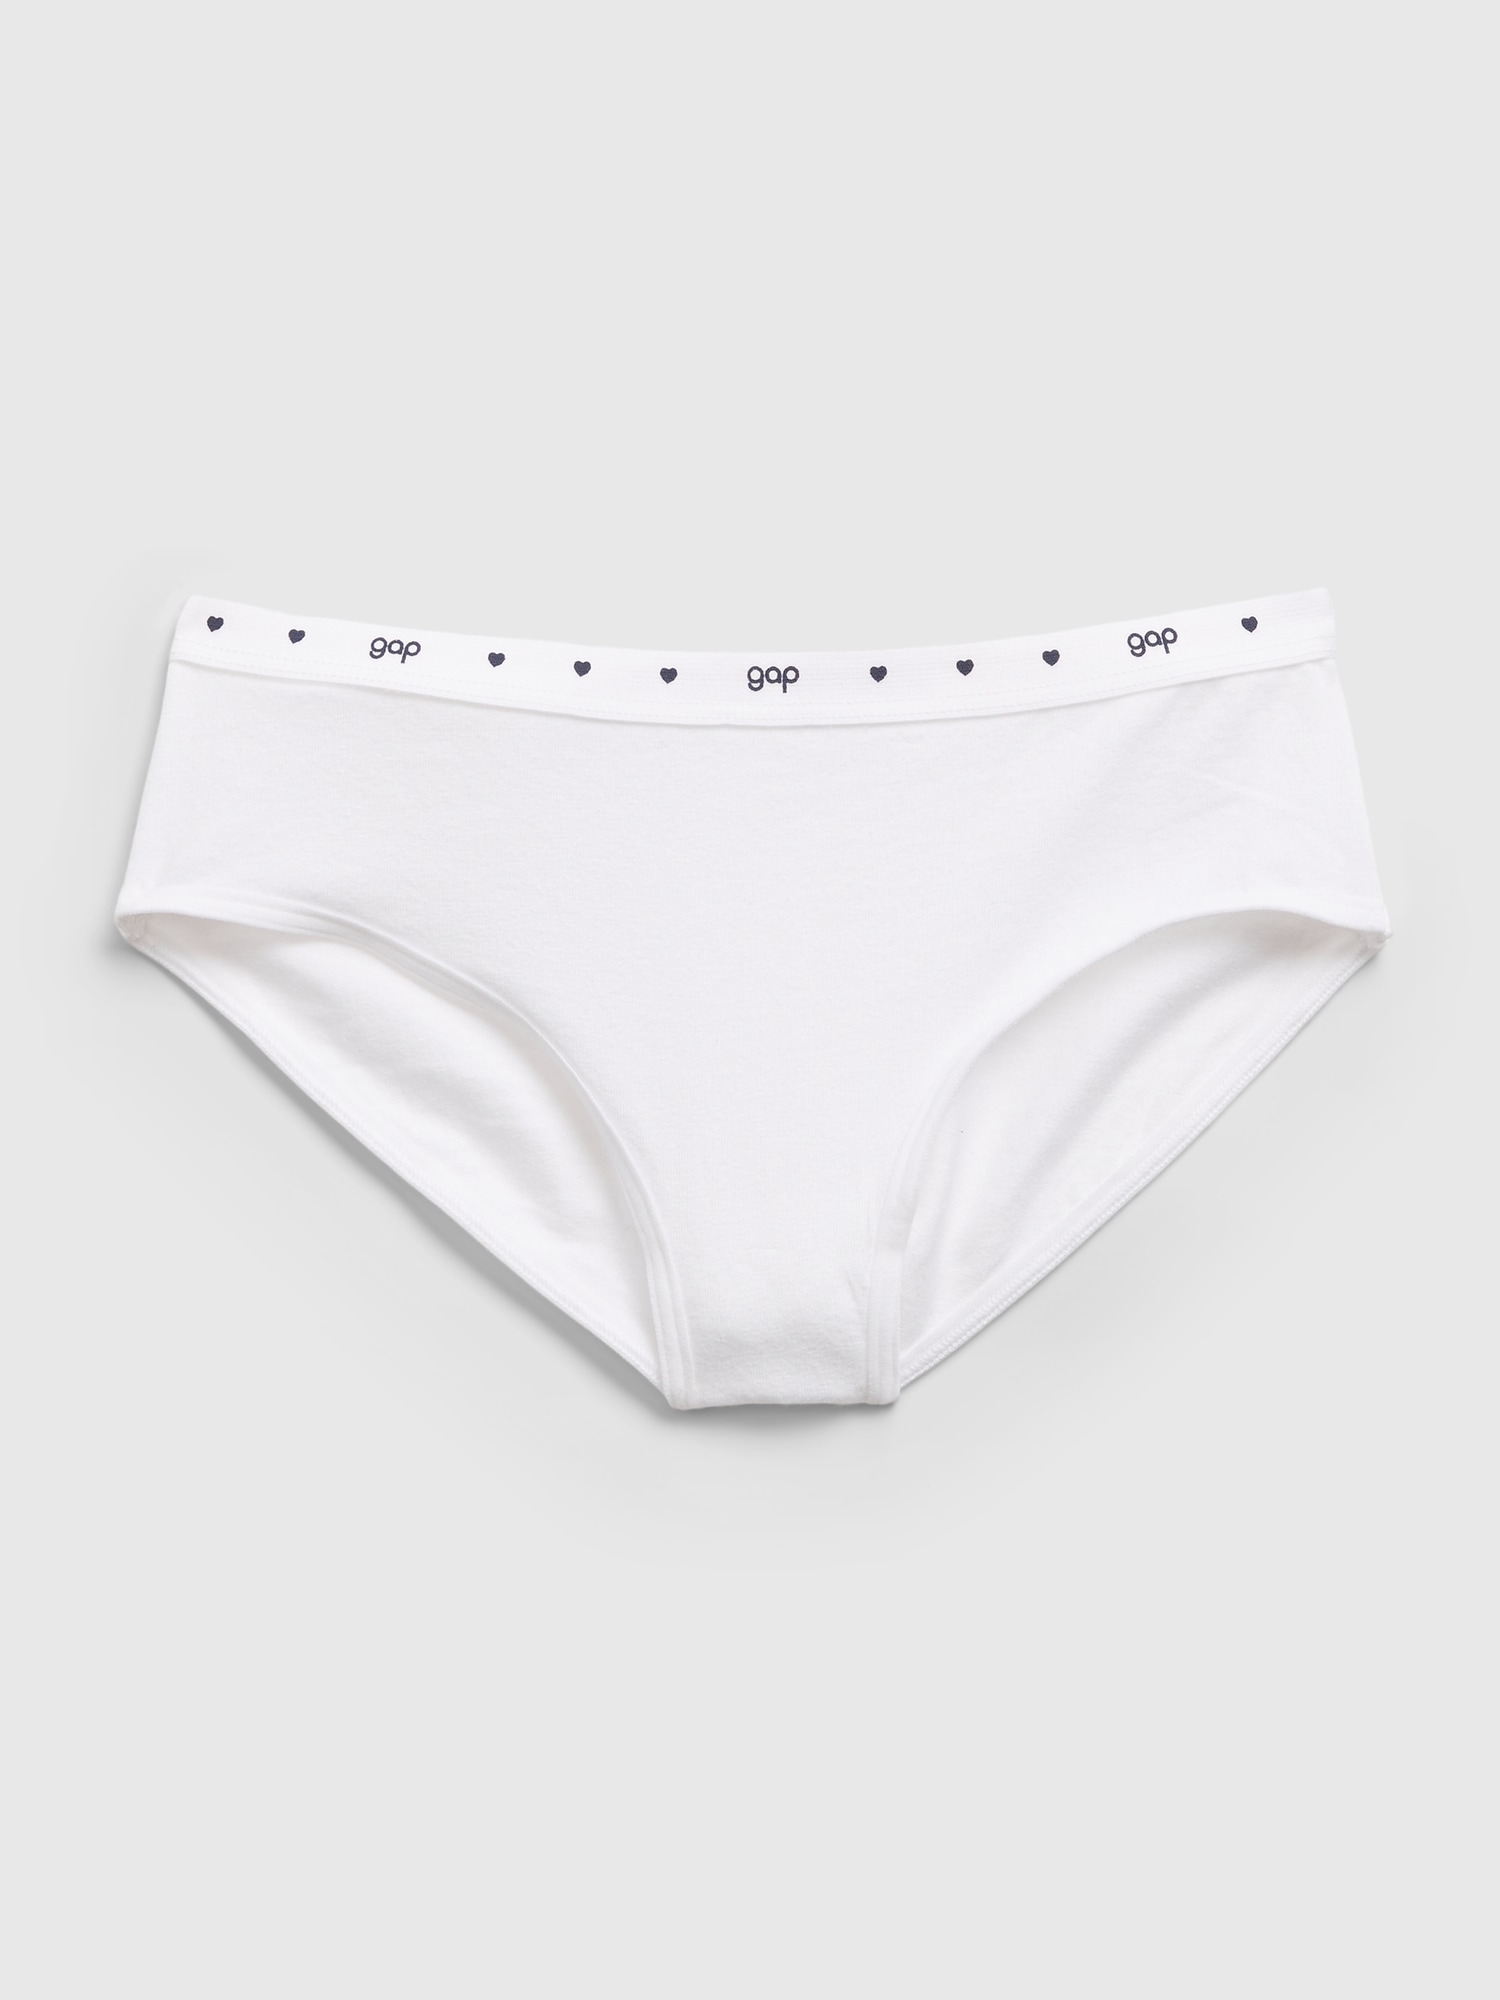 BUY 2 FREE 2 Children Underwear Girls Panties microfiber for Kids